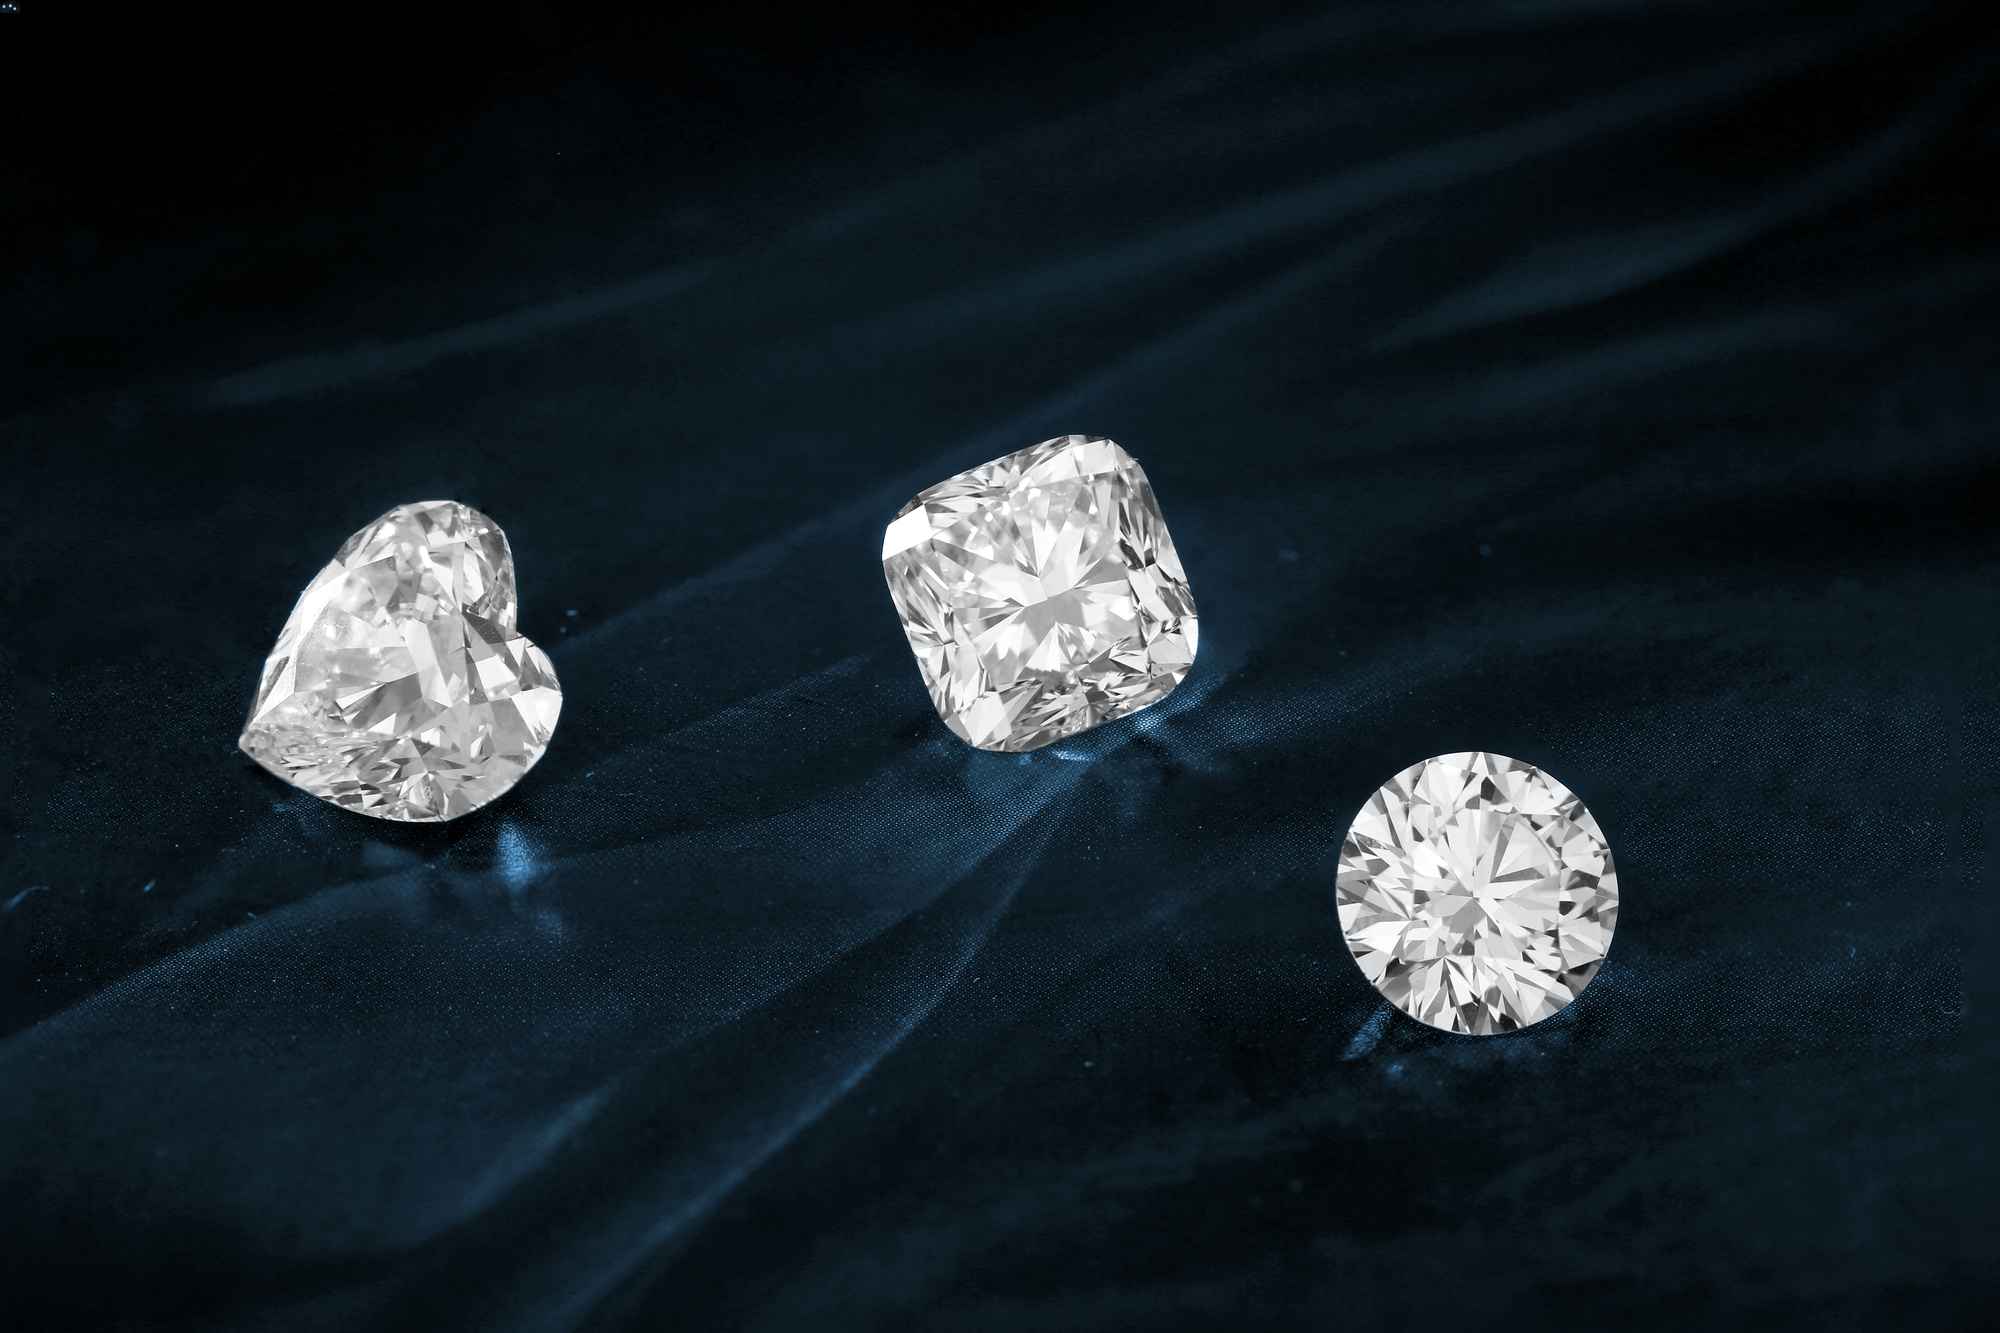 Lab Diamonds vs Natural Diamonds